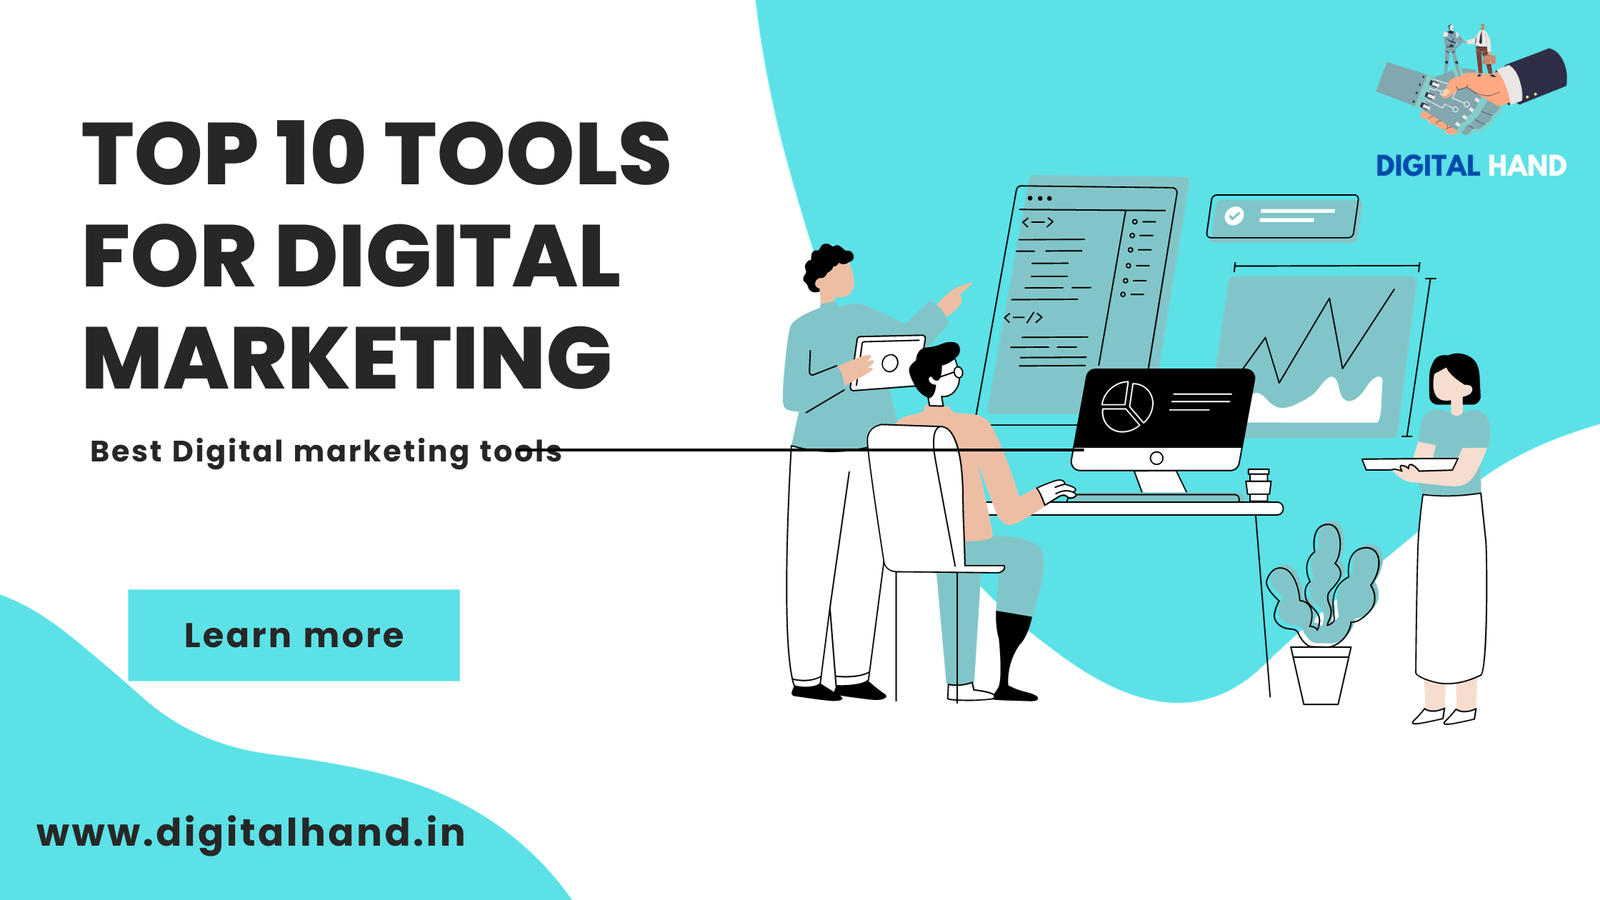 Top 10 Tools for Digital Marketing